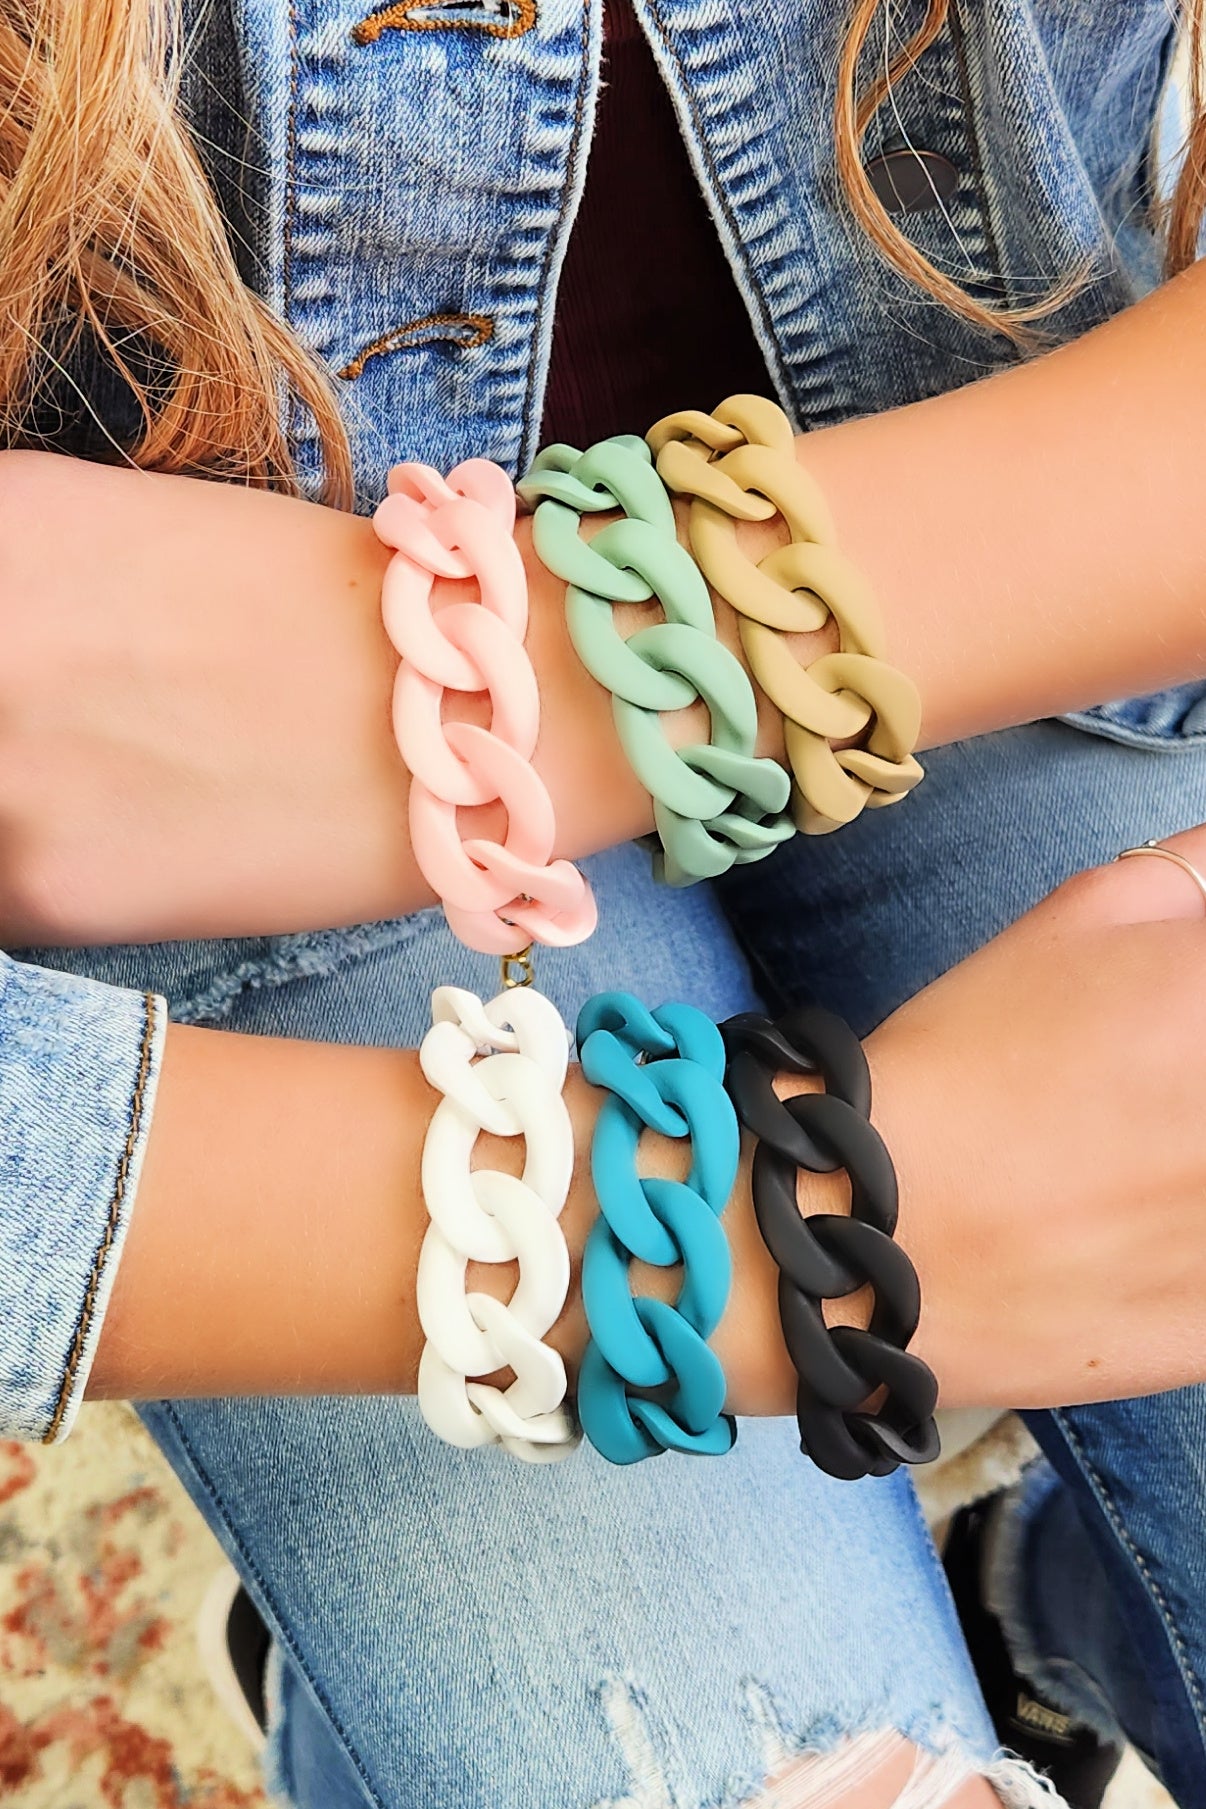 Chunky Chain Bracelets